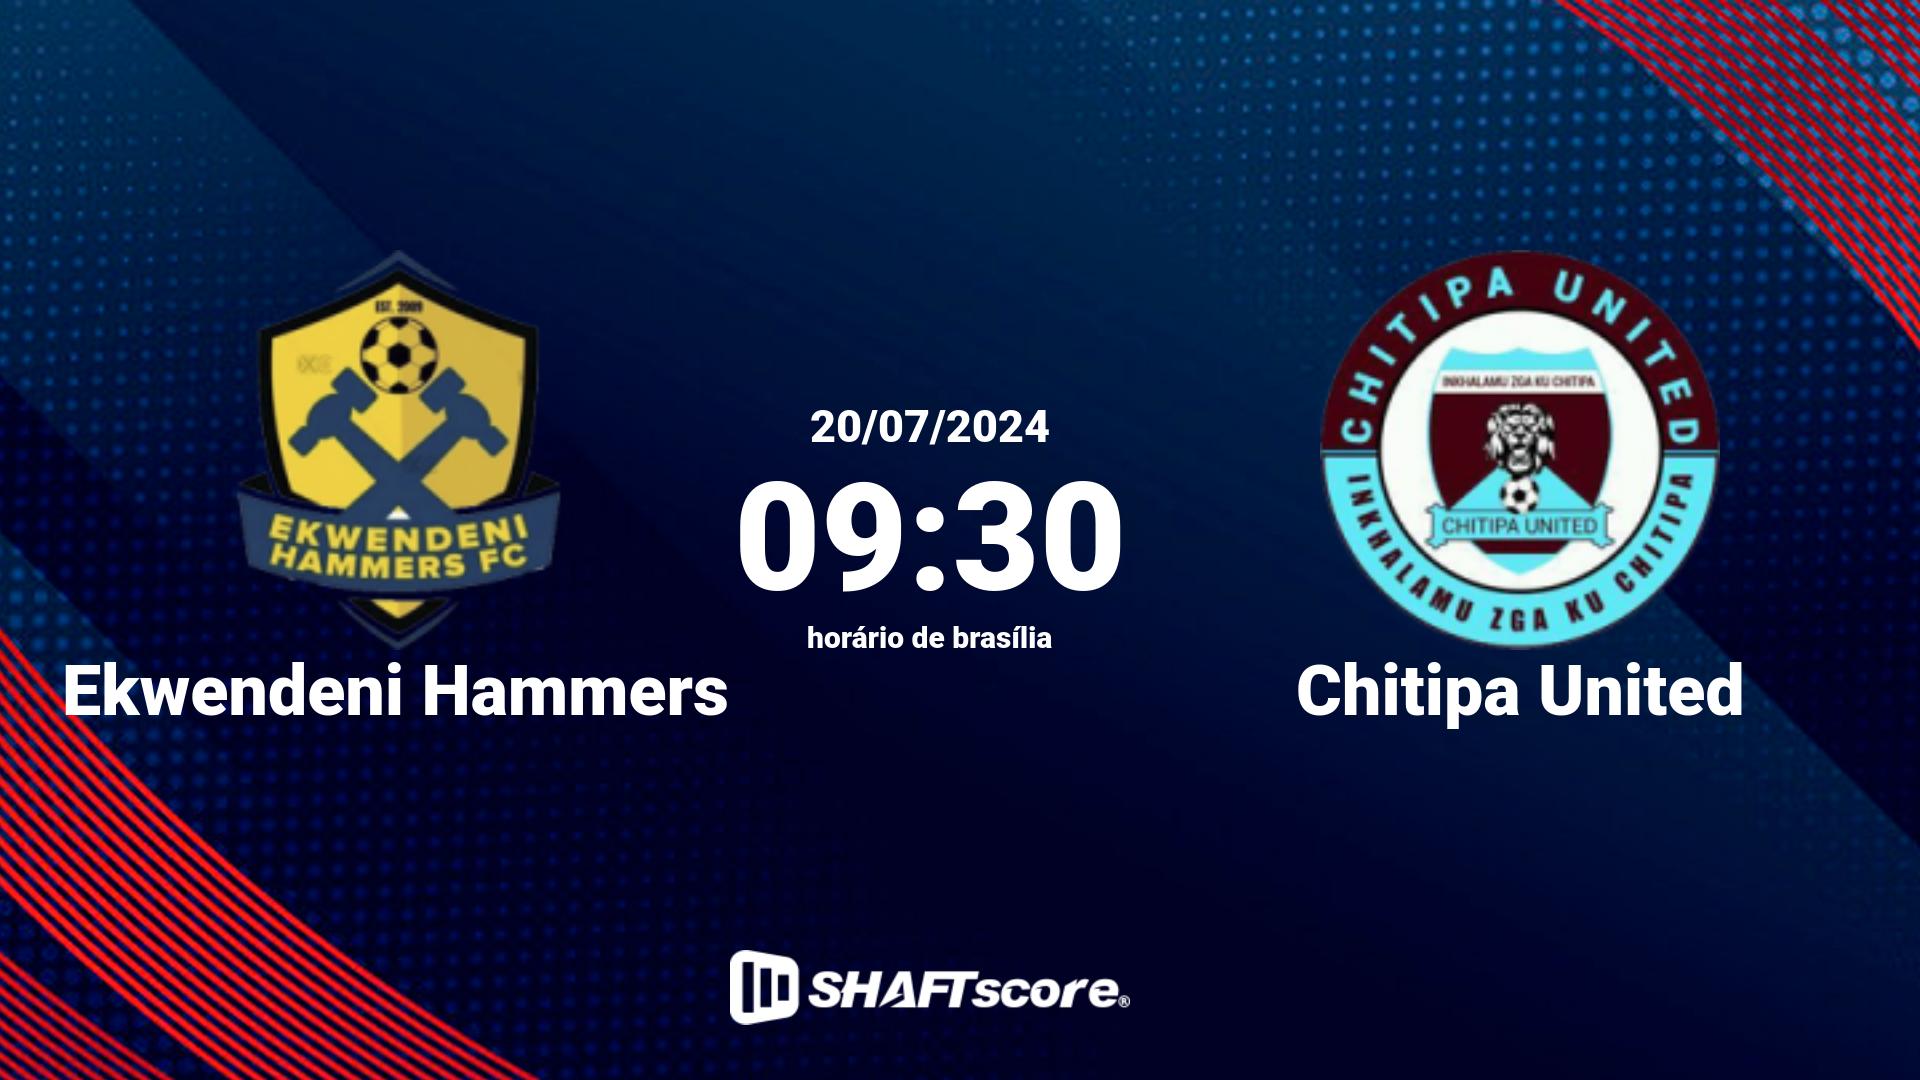 Estatísticas do jogo Ekwendeni Hammers vs Chitipa United 21.07 09:30